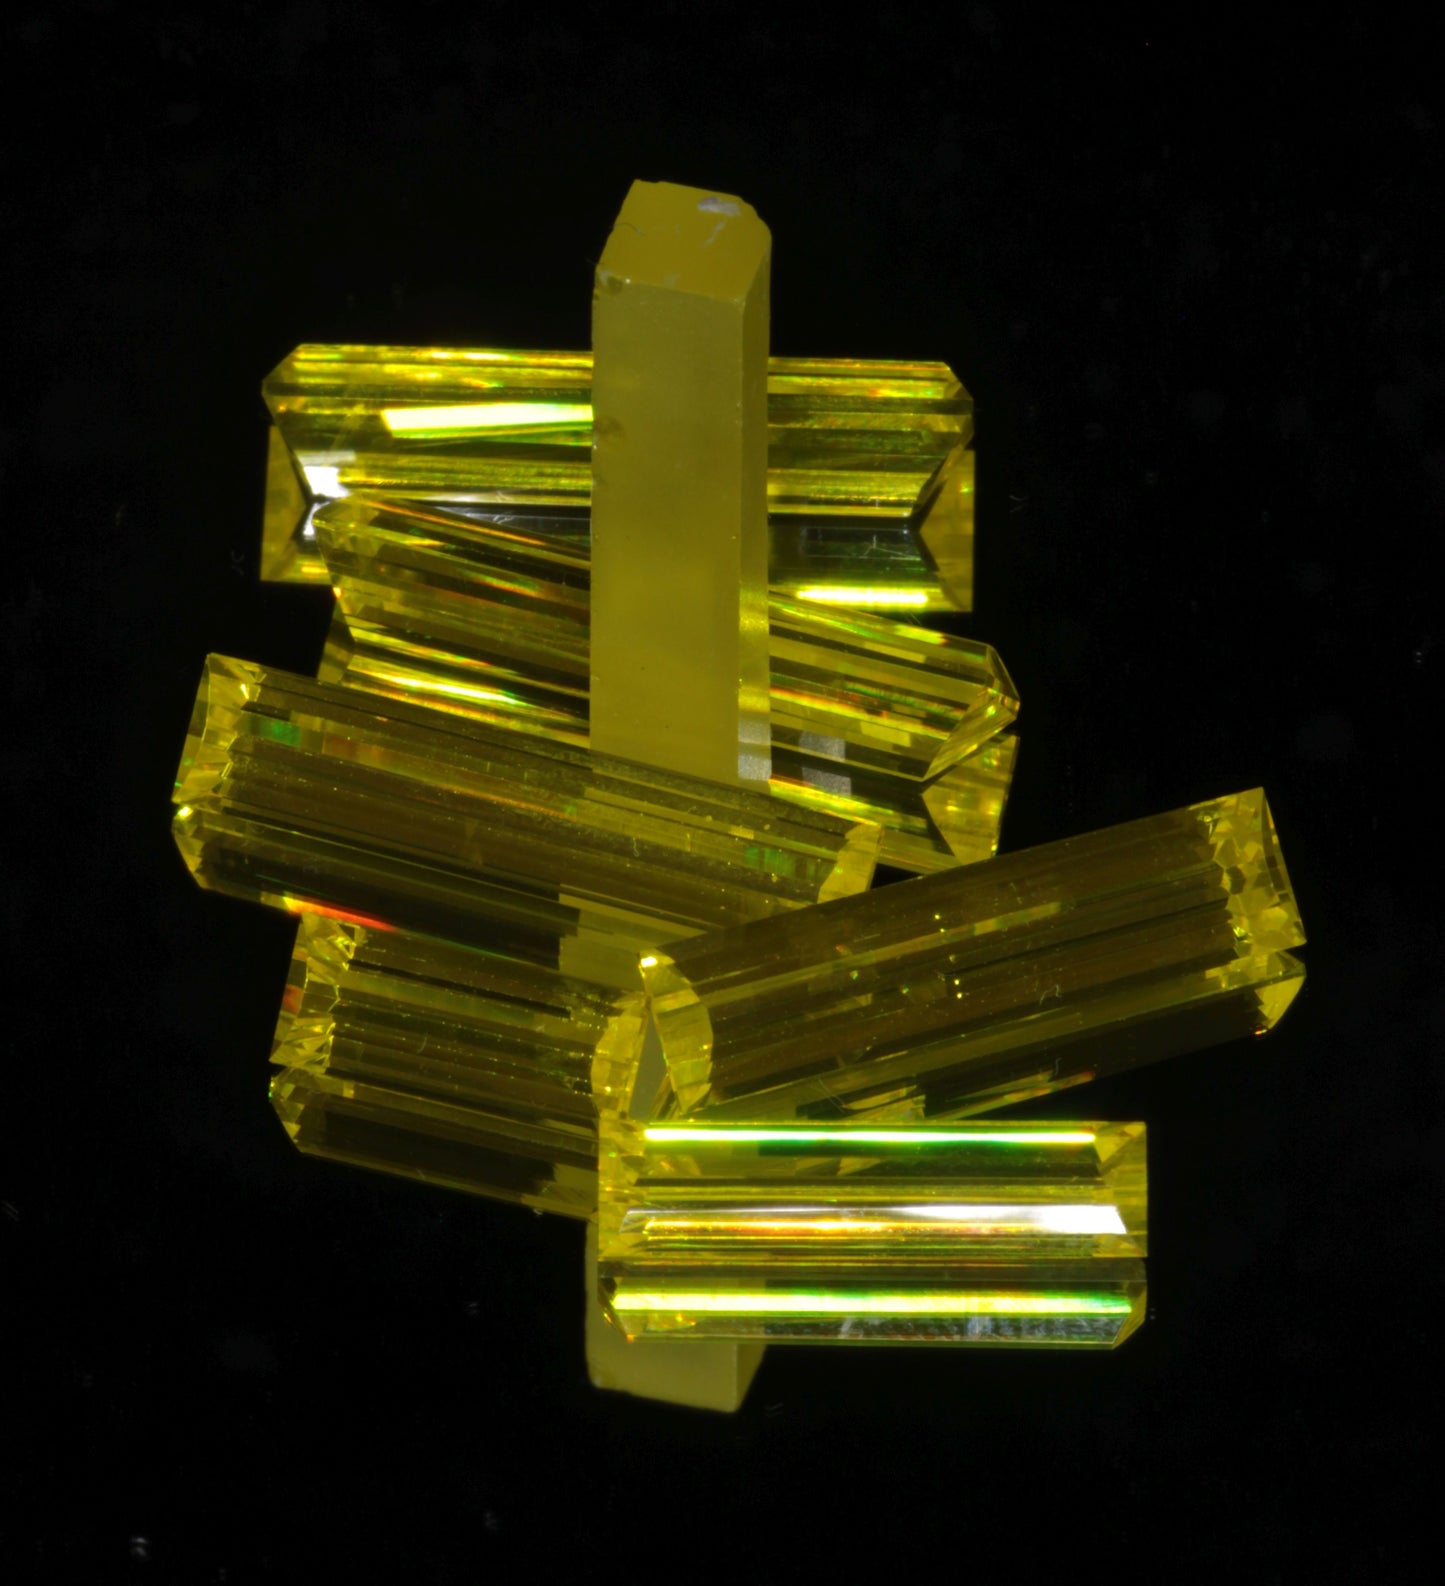 GAGG Pixels, Yellow Lumogarnet Scintillator  (Day Glow Fluorescence, Slight Phosphorescence)